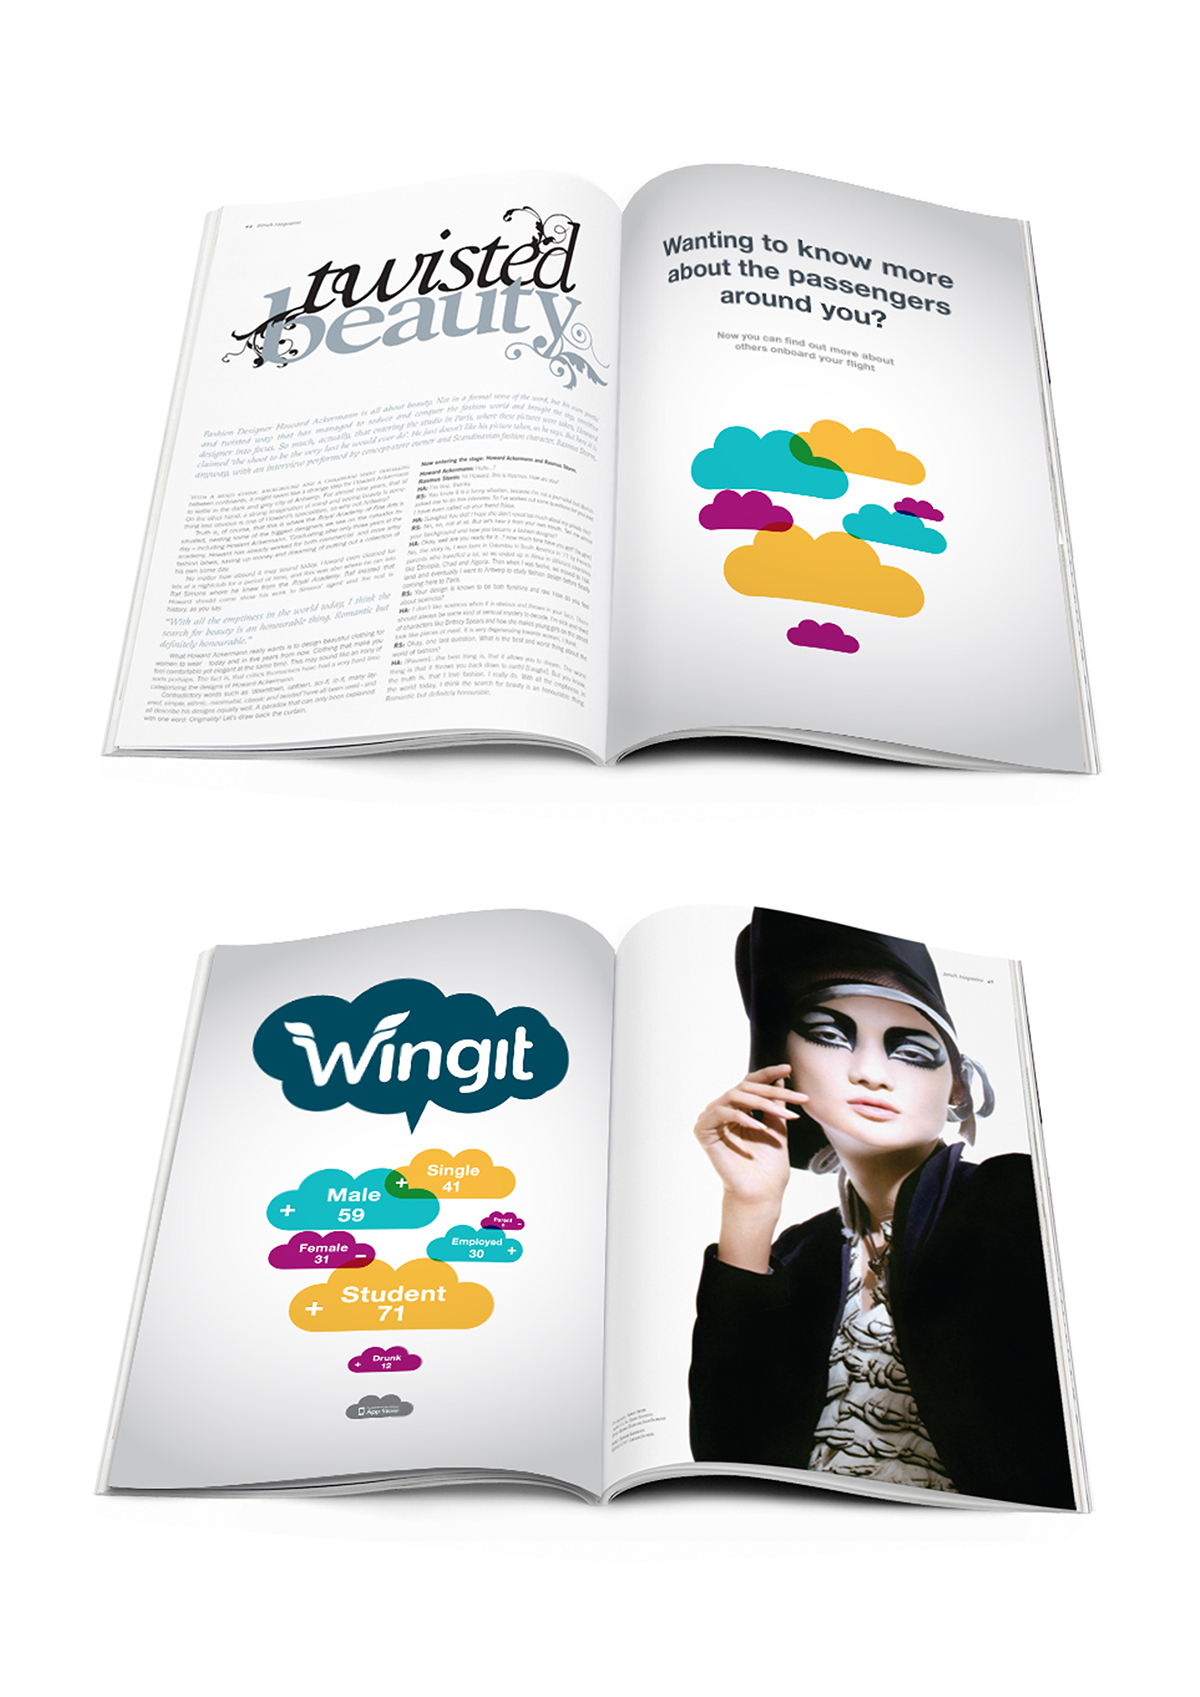 Wingit app inflight entertainment social network social networking Amy amy harmer interactive design app design